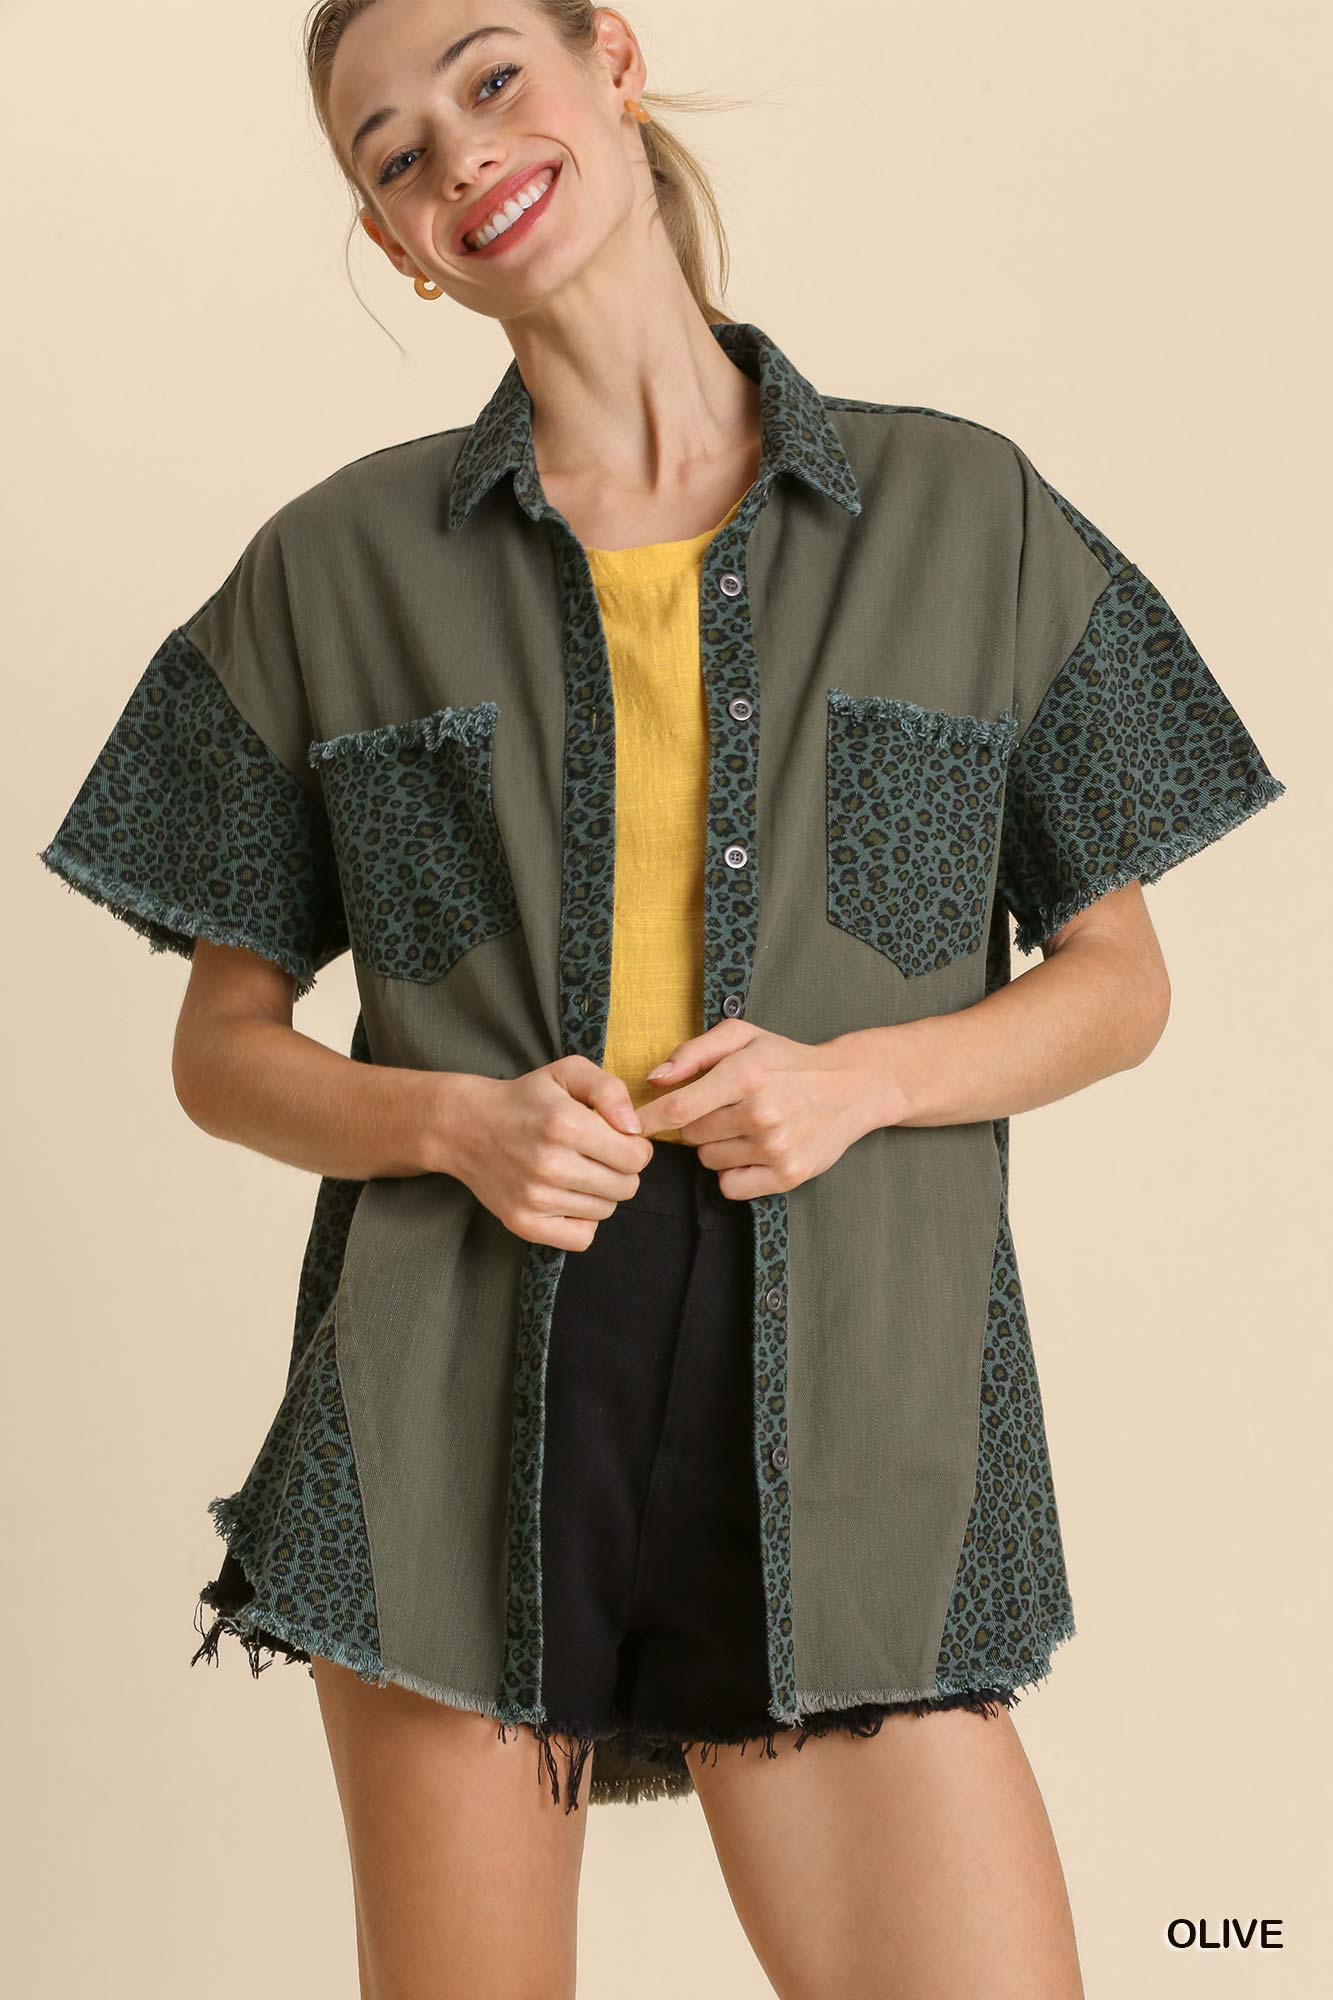 Mixed Animal Print Oversized Jacket With Chest Pockets Sunny EvE Fashion